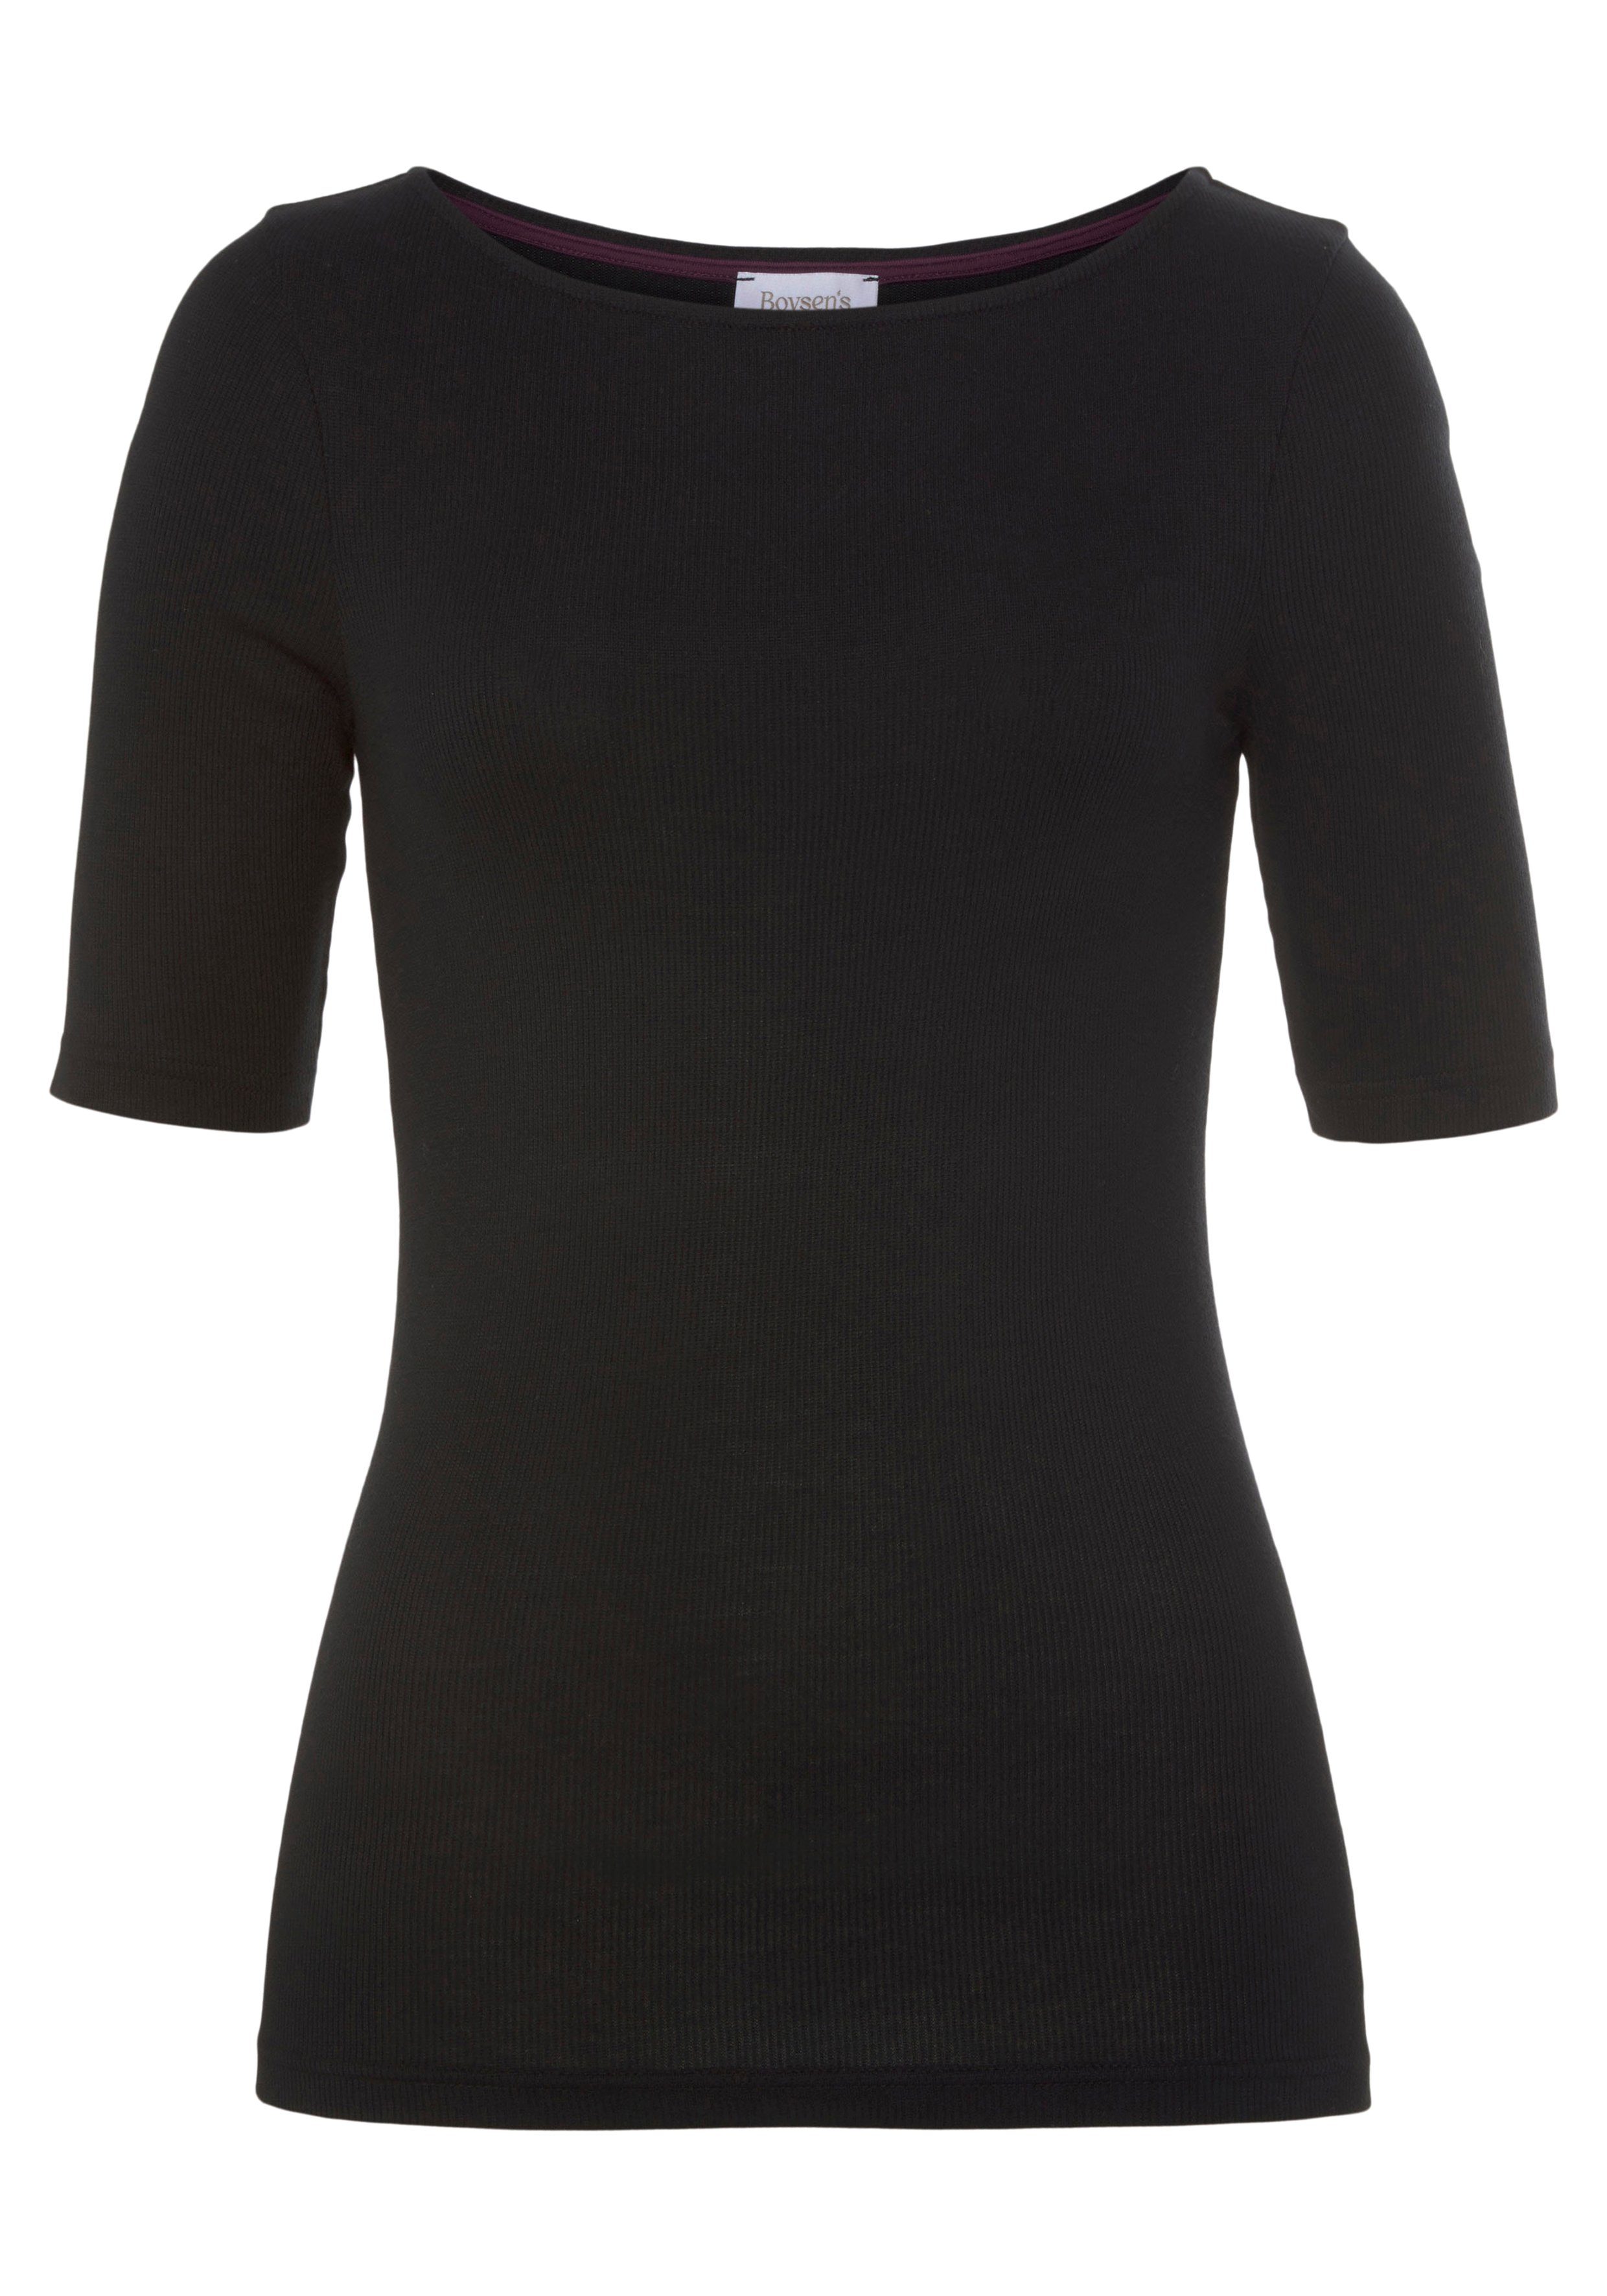 Boysen's Kurzarmshirt mit U-Boot-Ausschnitt - NEUE KOLLEKTION schwarz